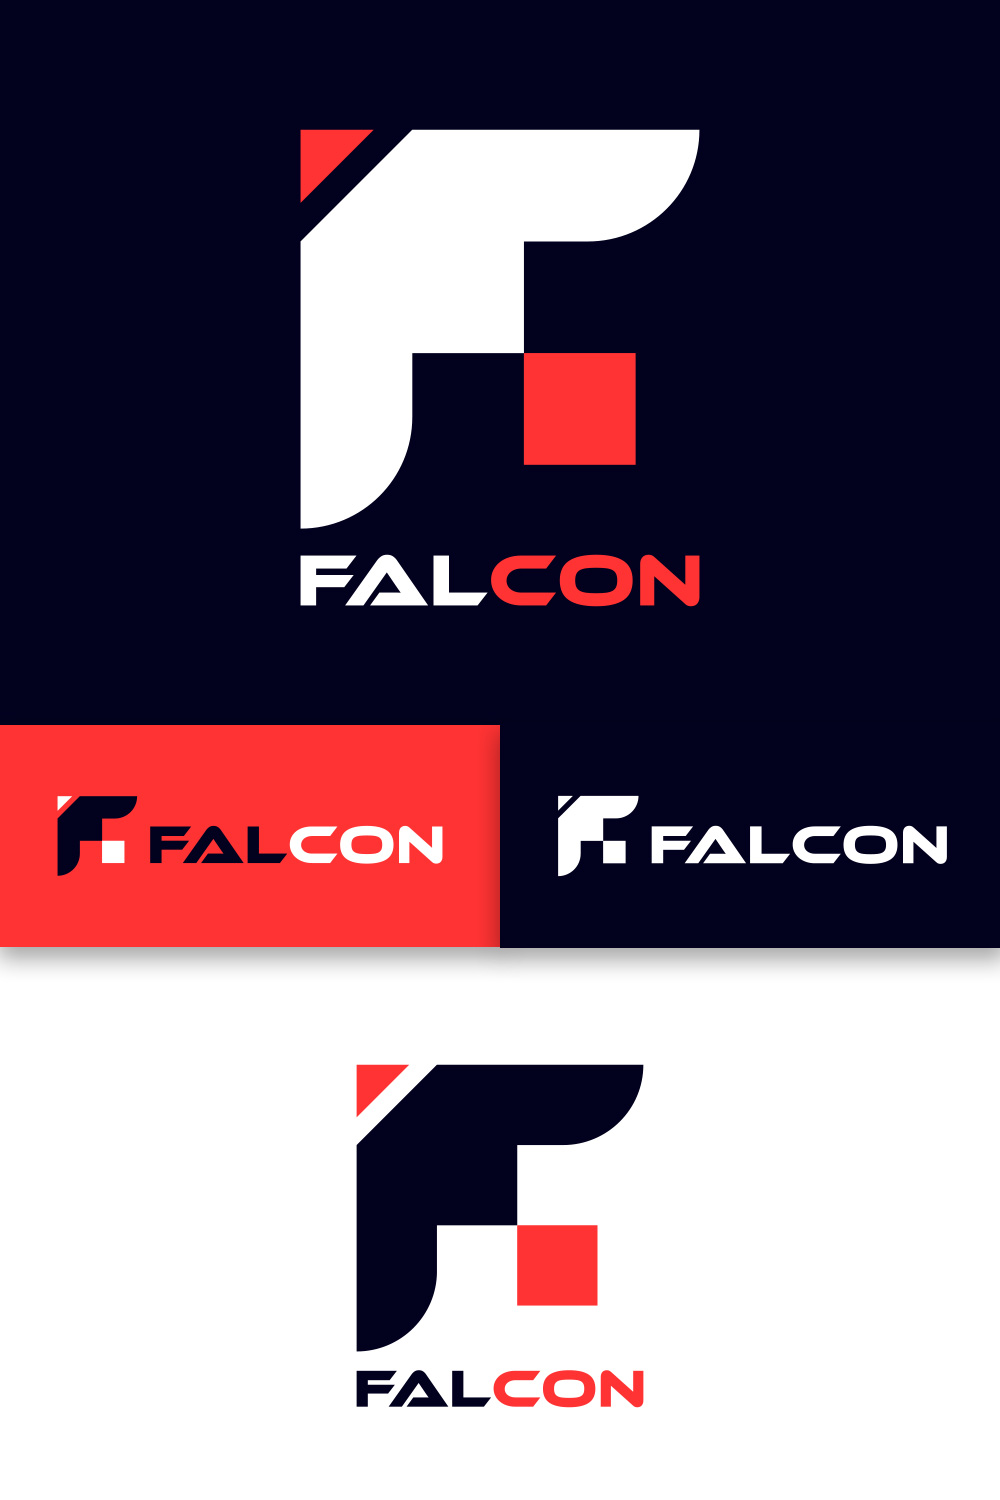 Falcon F Lettter Eagle Logo Design pinterest image.